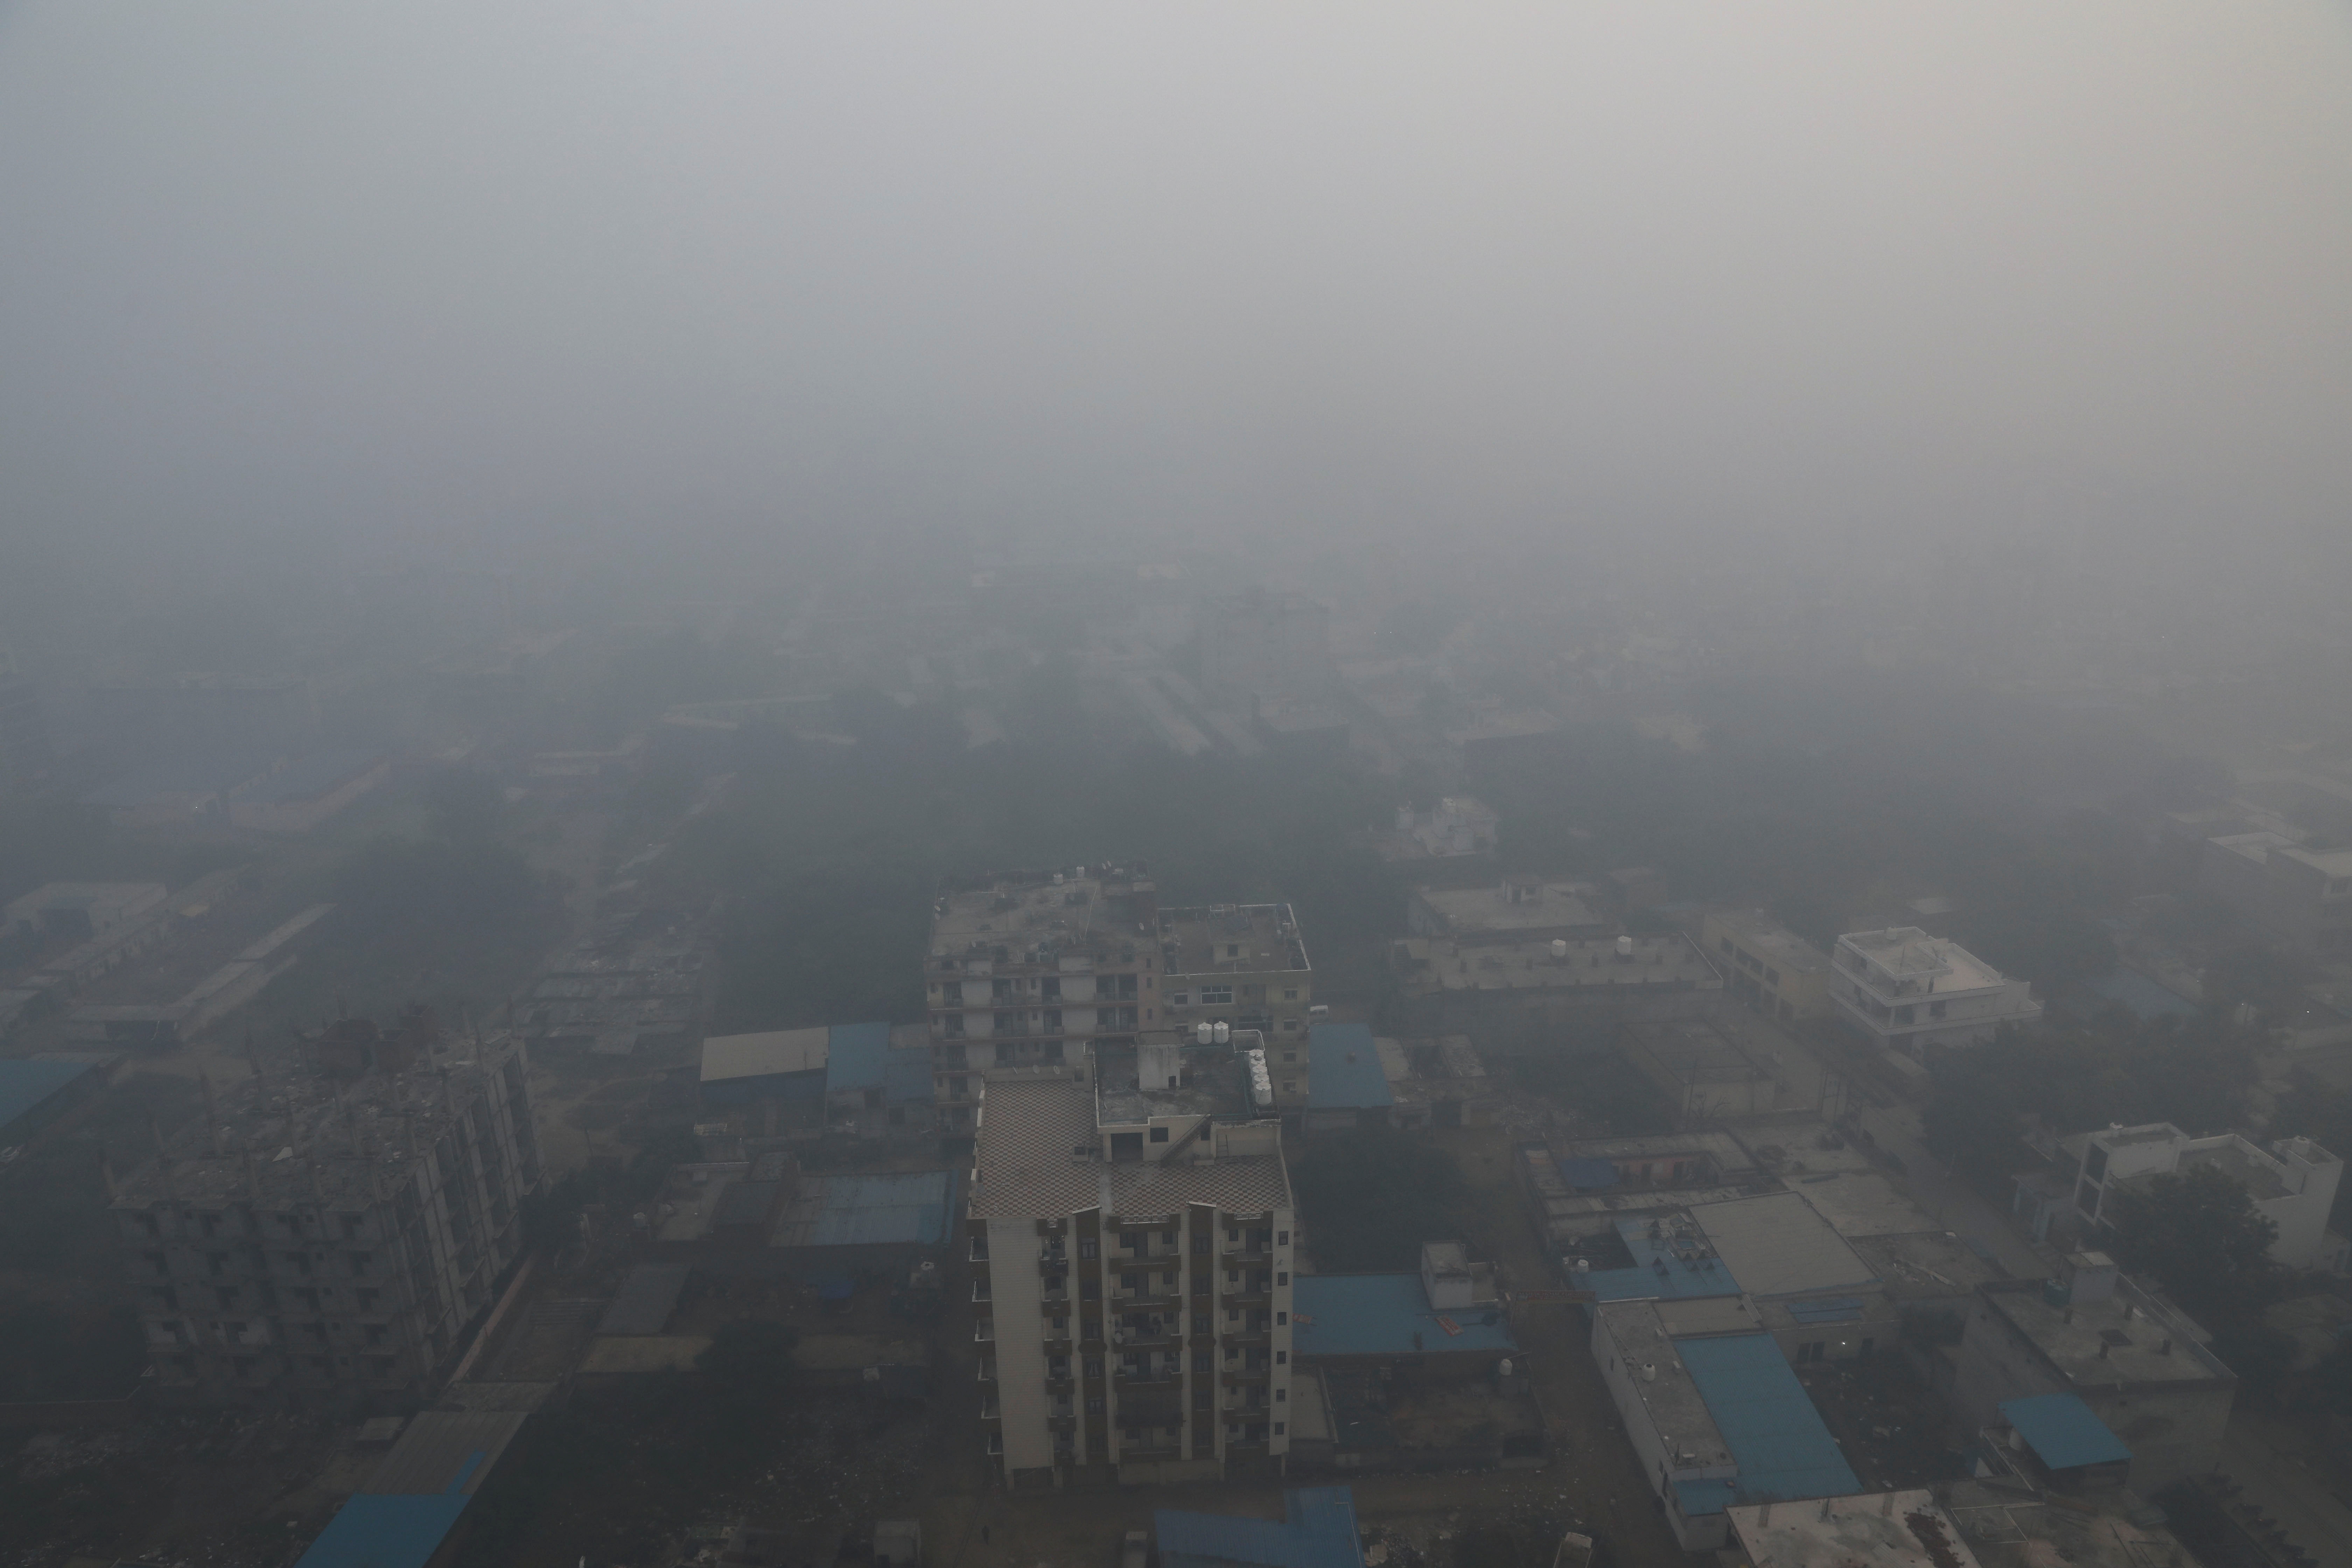 Residential buildings are seen shrouded in smog in Noida, India, November 5, 2021. REUTERS/Anushree Fadnavis